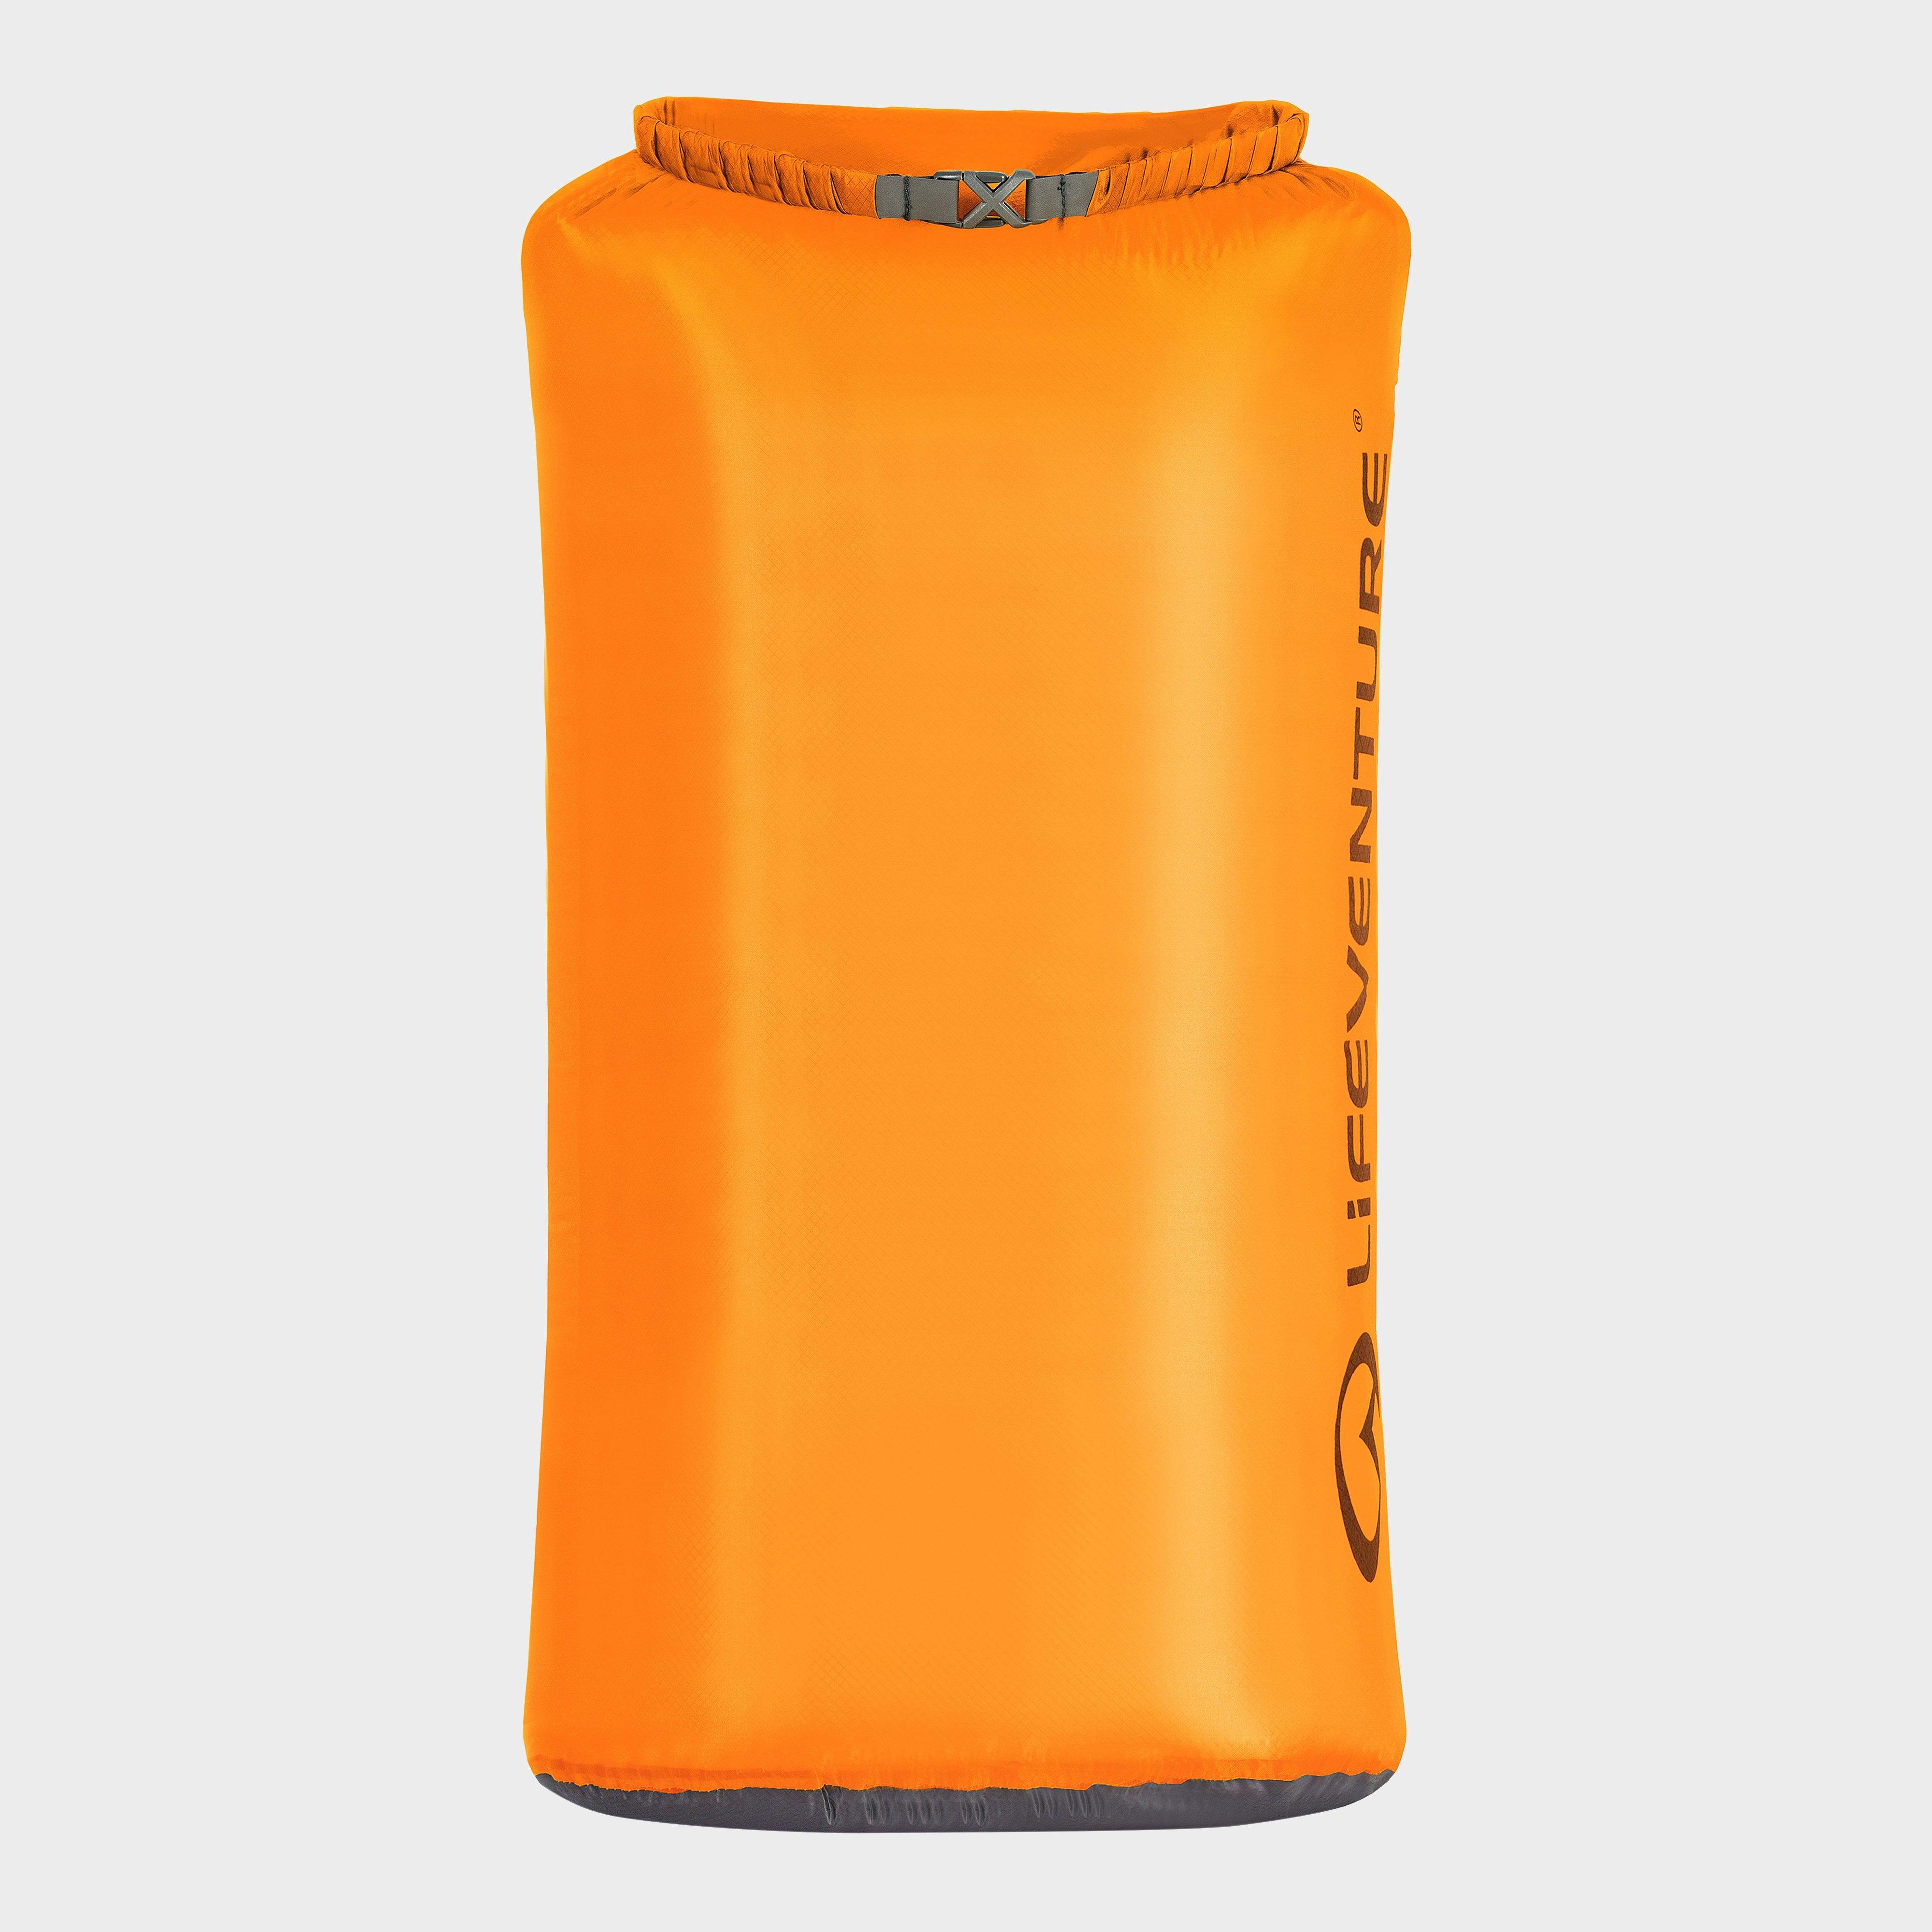 Lifeventure Ultralight 75l Dry Bag  Orange